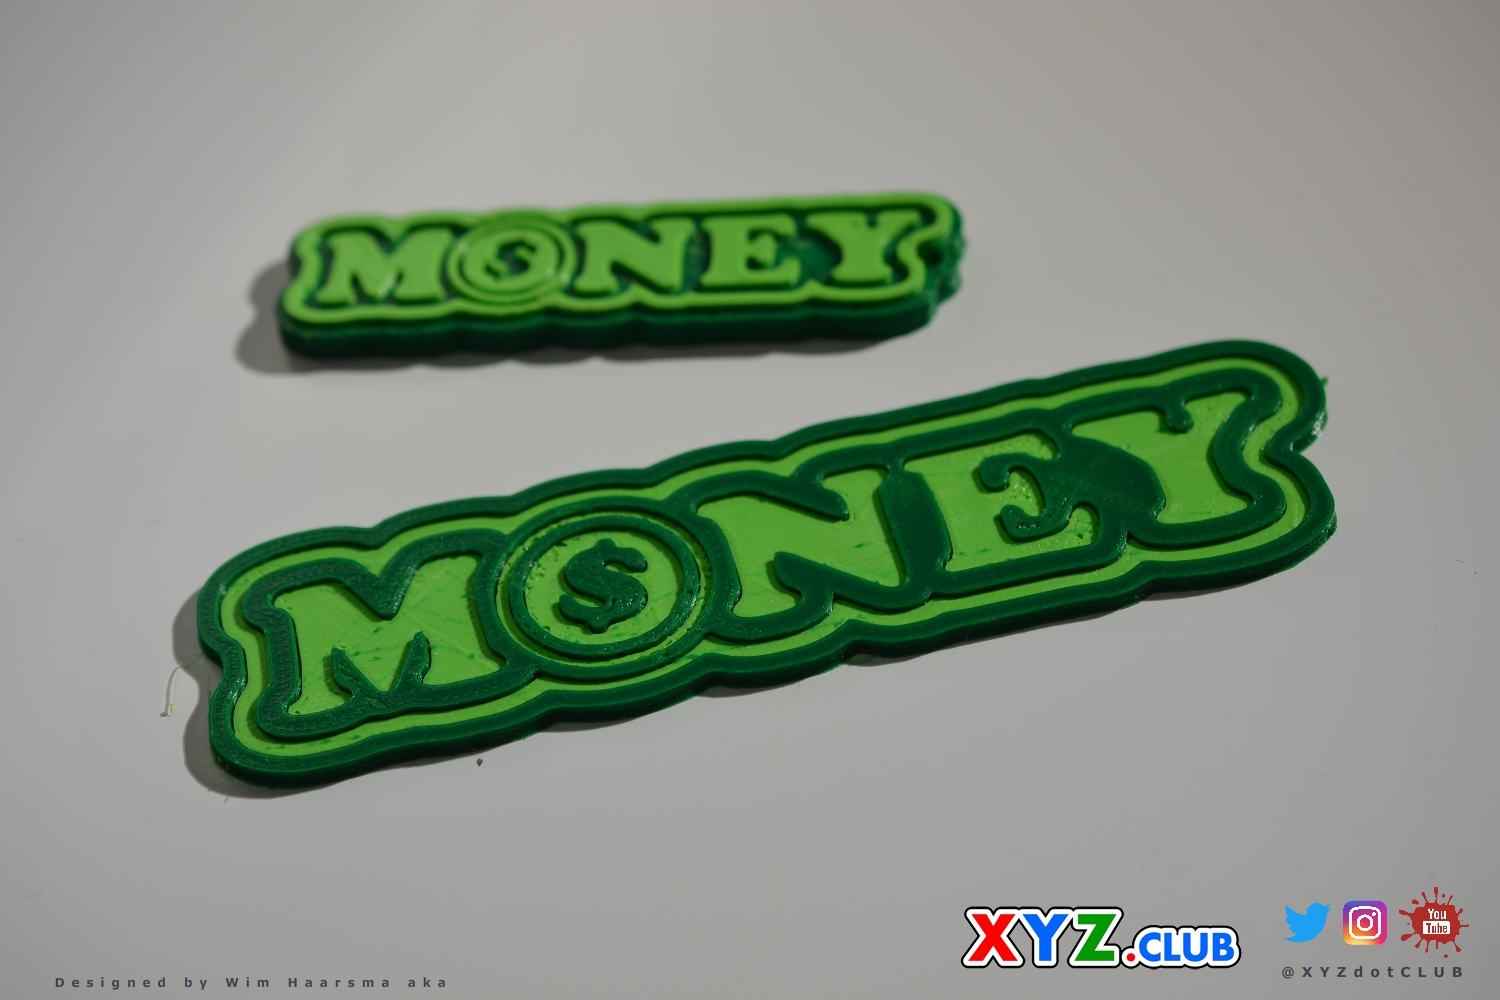 "Money - M($)ney - Money"